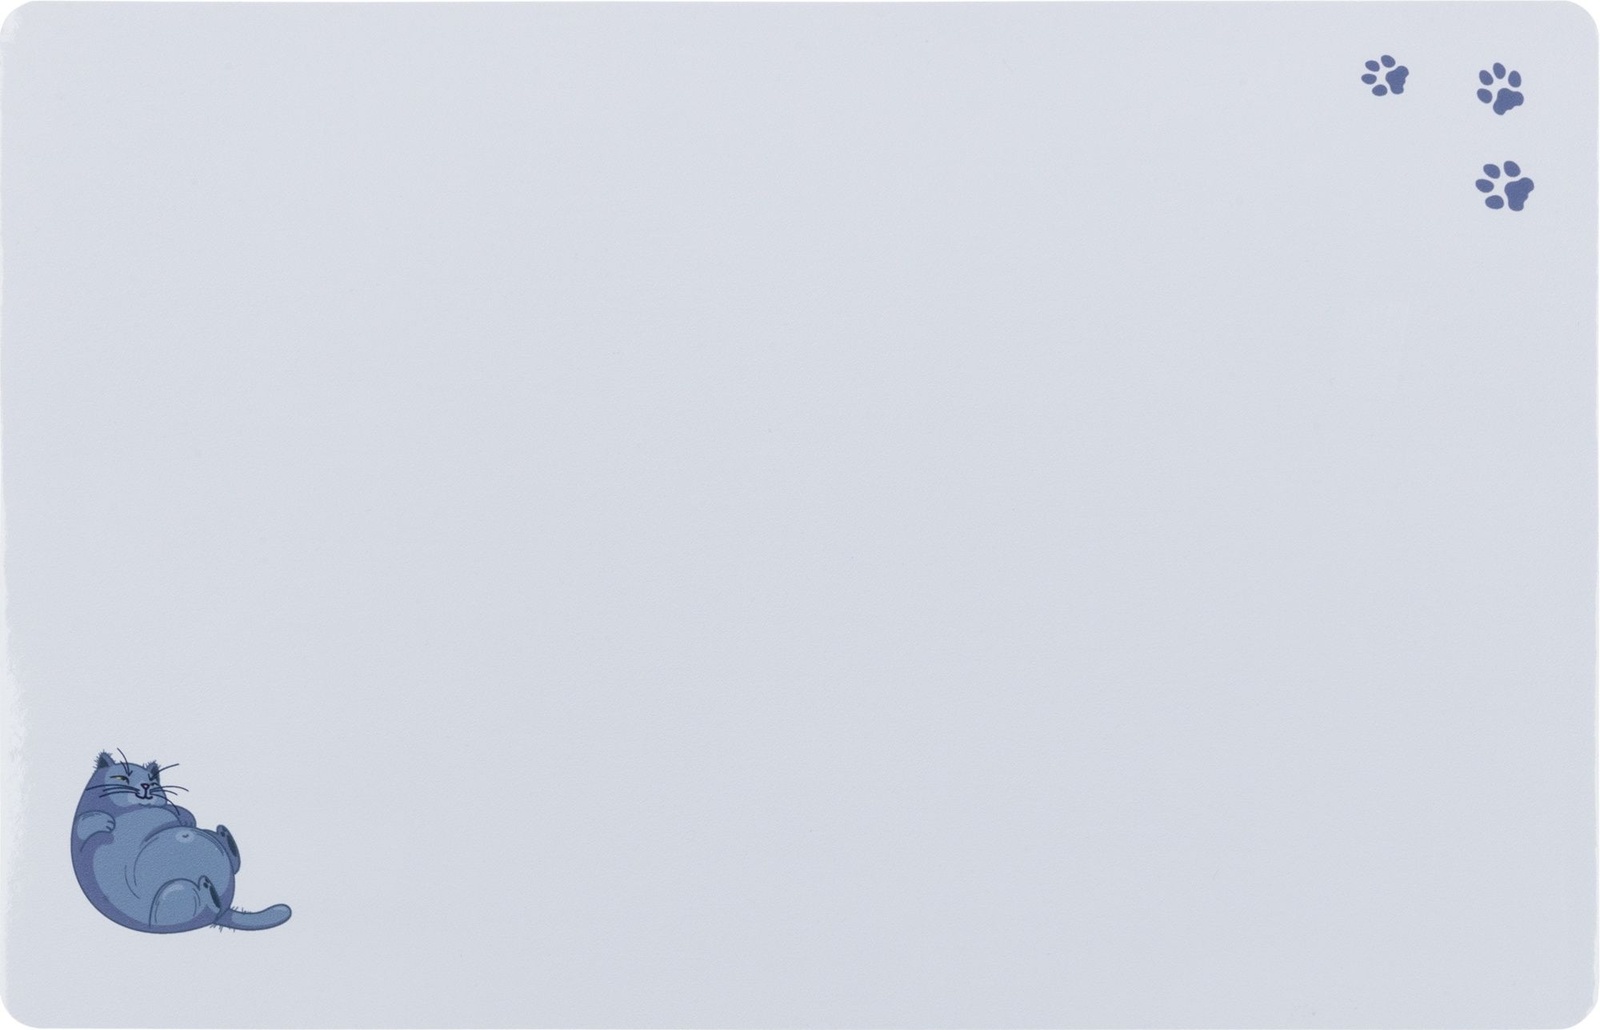 Trixie Trixie коврик под миску с рисунком Толстый кот/лапки, 44 x 28 см, серый (80 г) коврик под миску с рисунком лапки 44 х 28 см белый